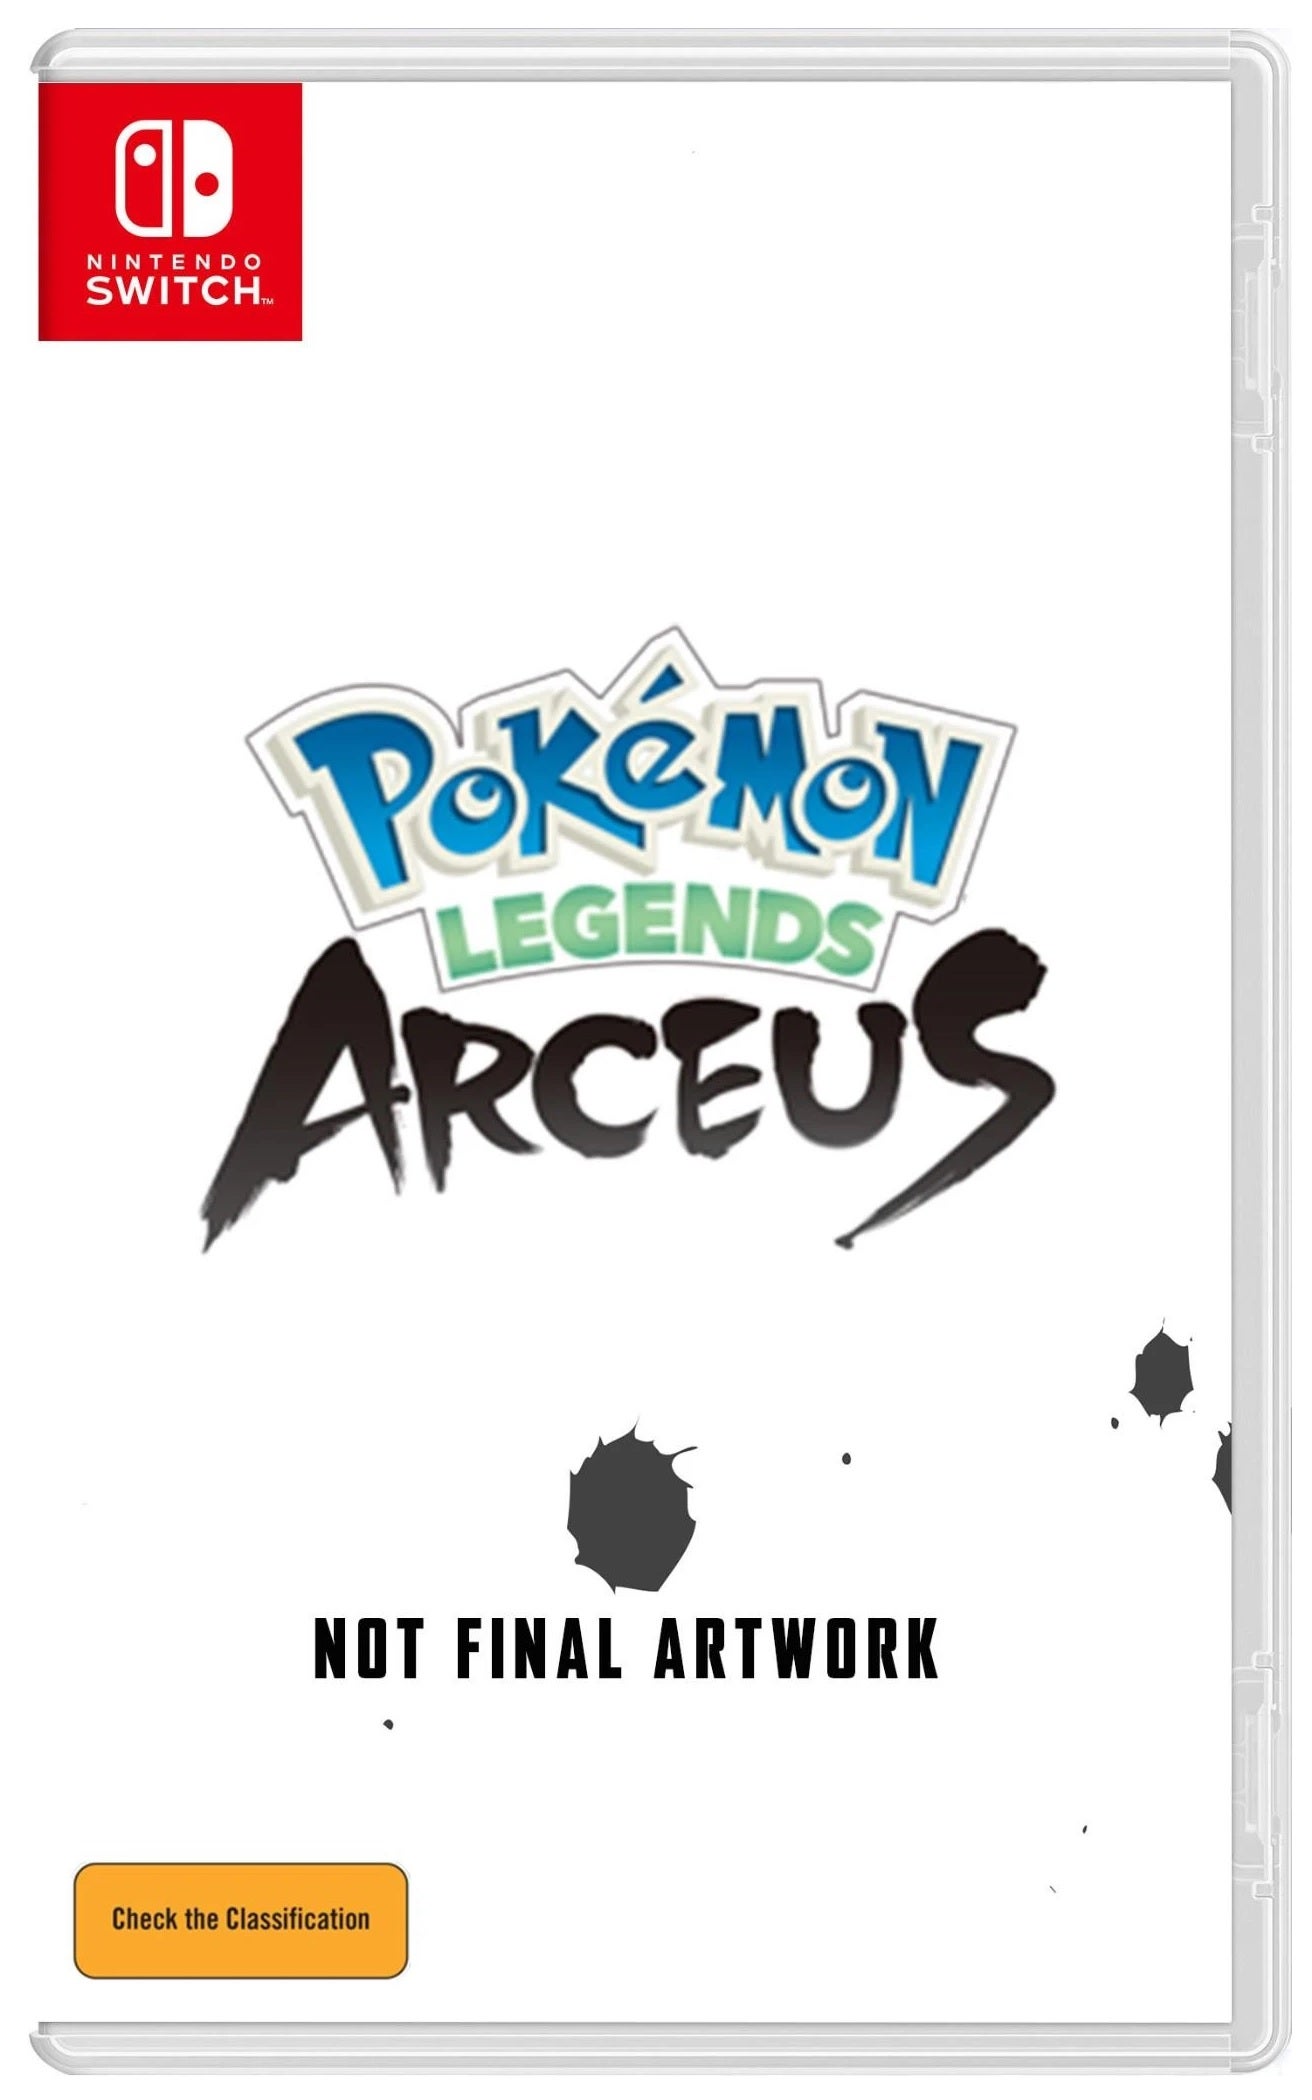 Nintendo Pokemon Legends Arceus Nintendo Switch Game